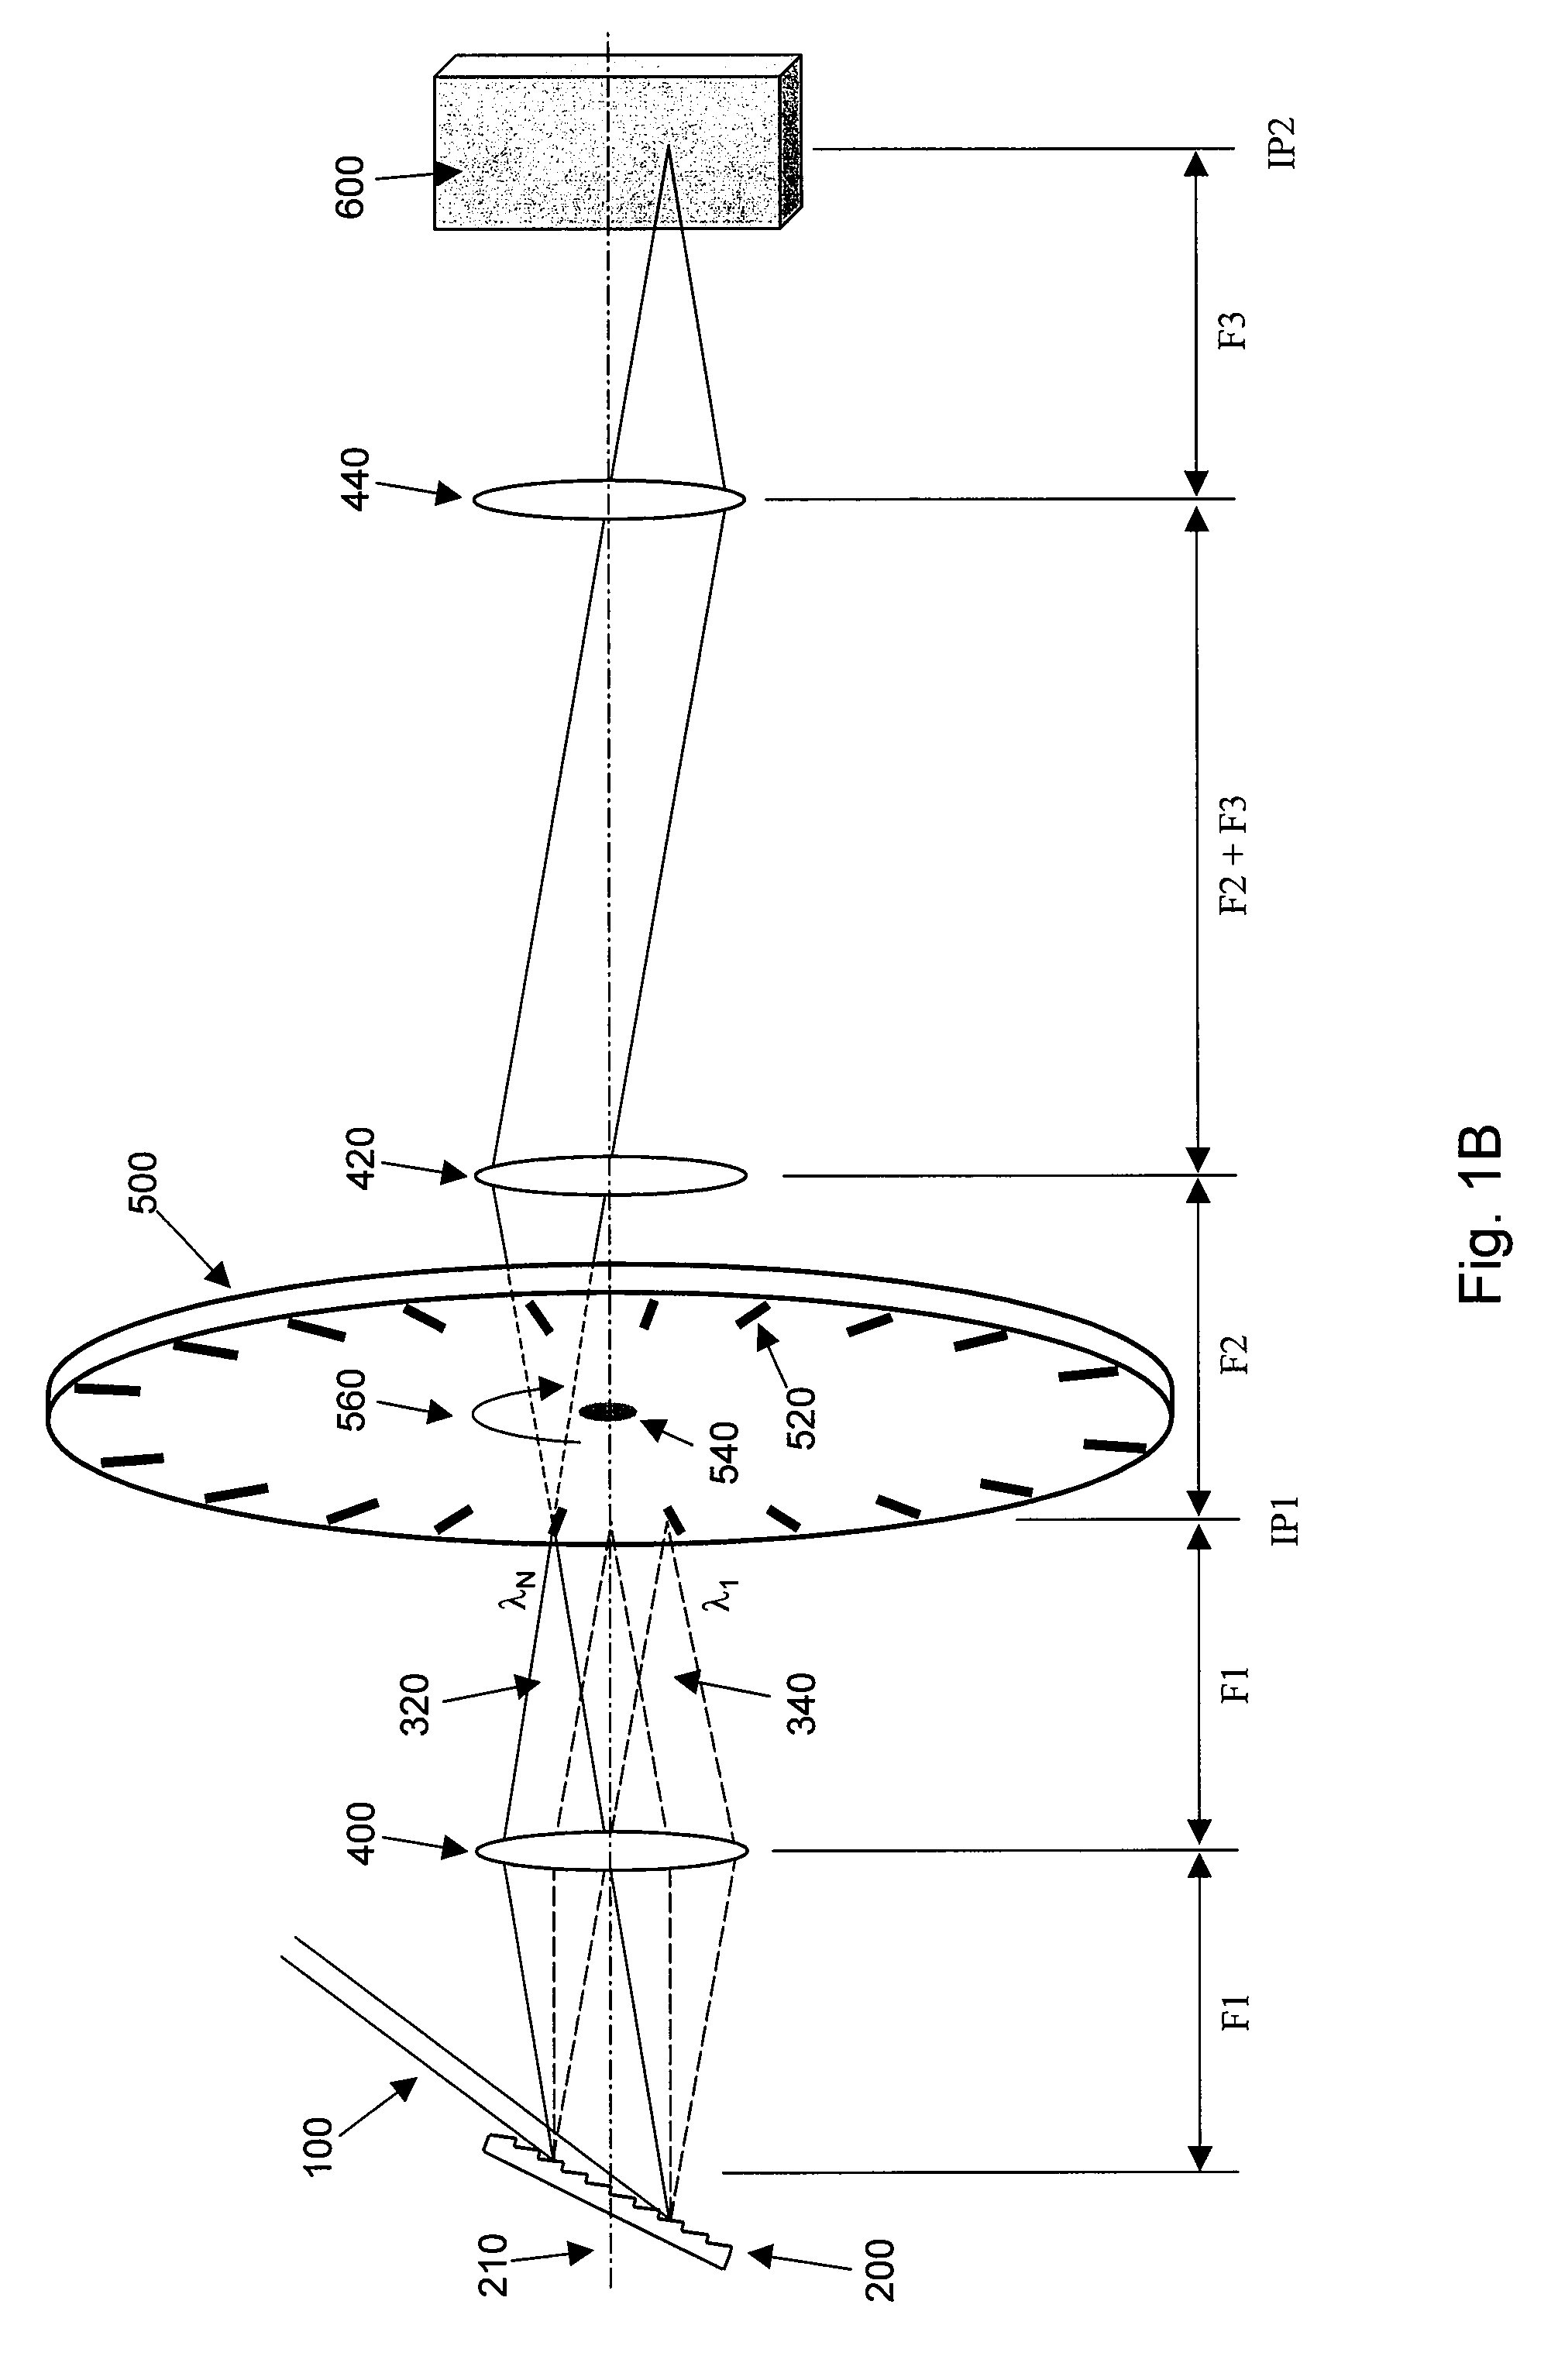 Wavelength tuning source based on a rotatable reflector